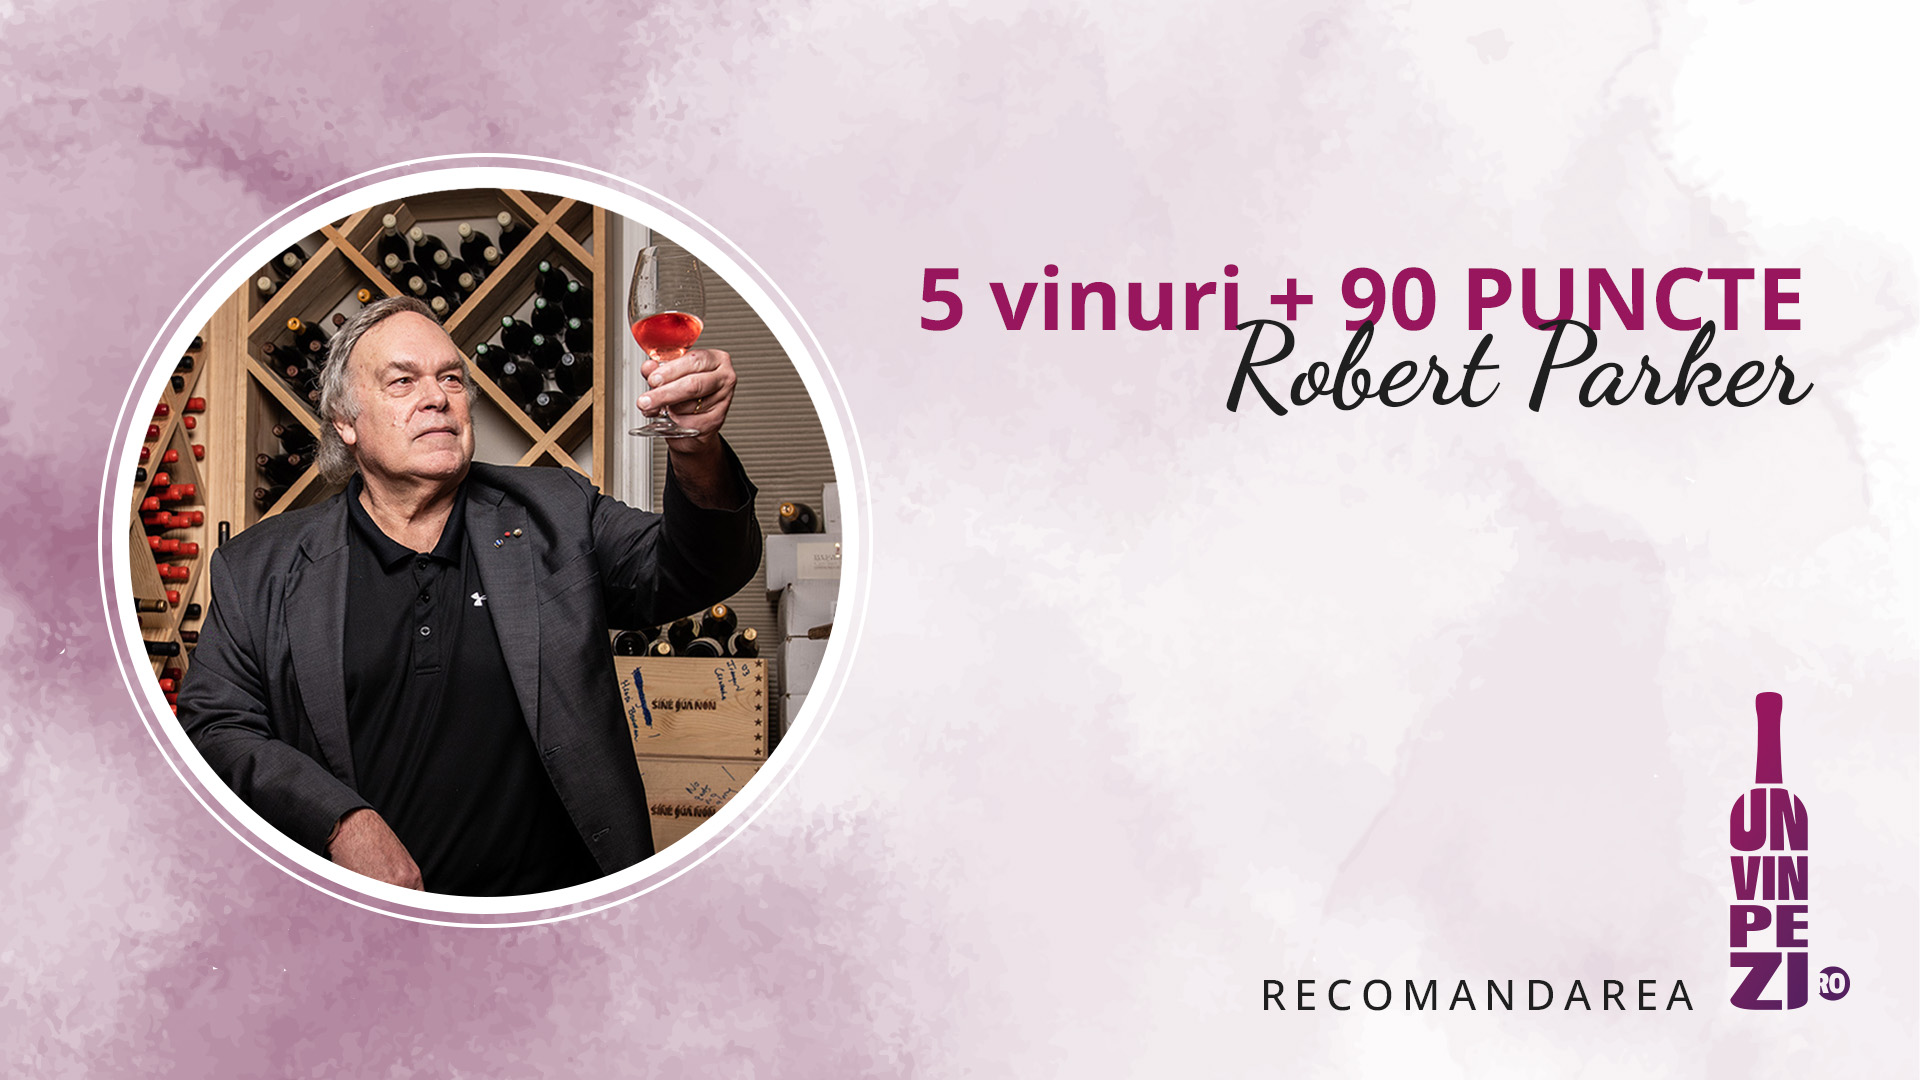 5 Vinuri +90 puncte Robert Parker, recomandate de Unvinpezi.ro